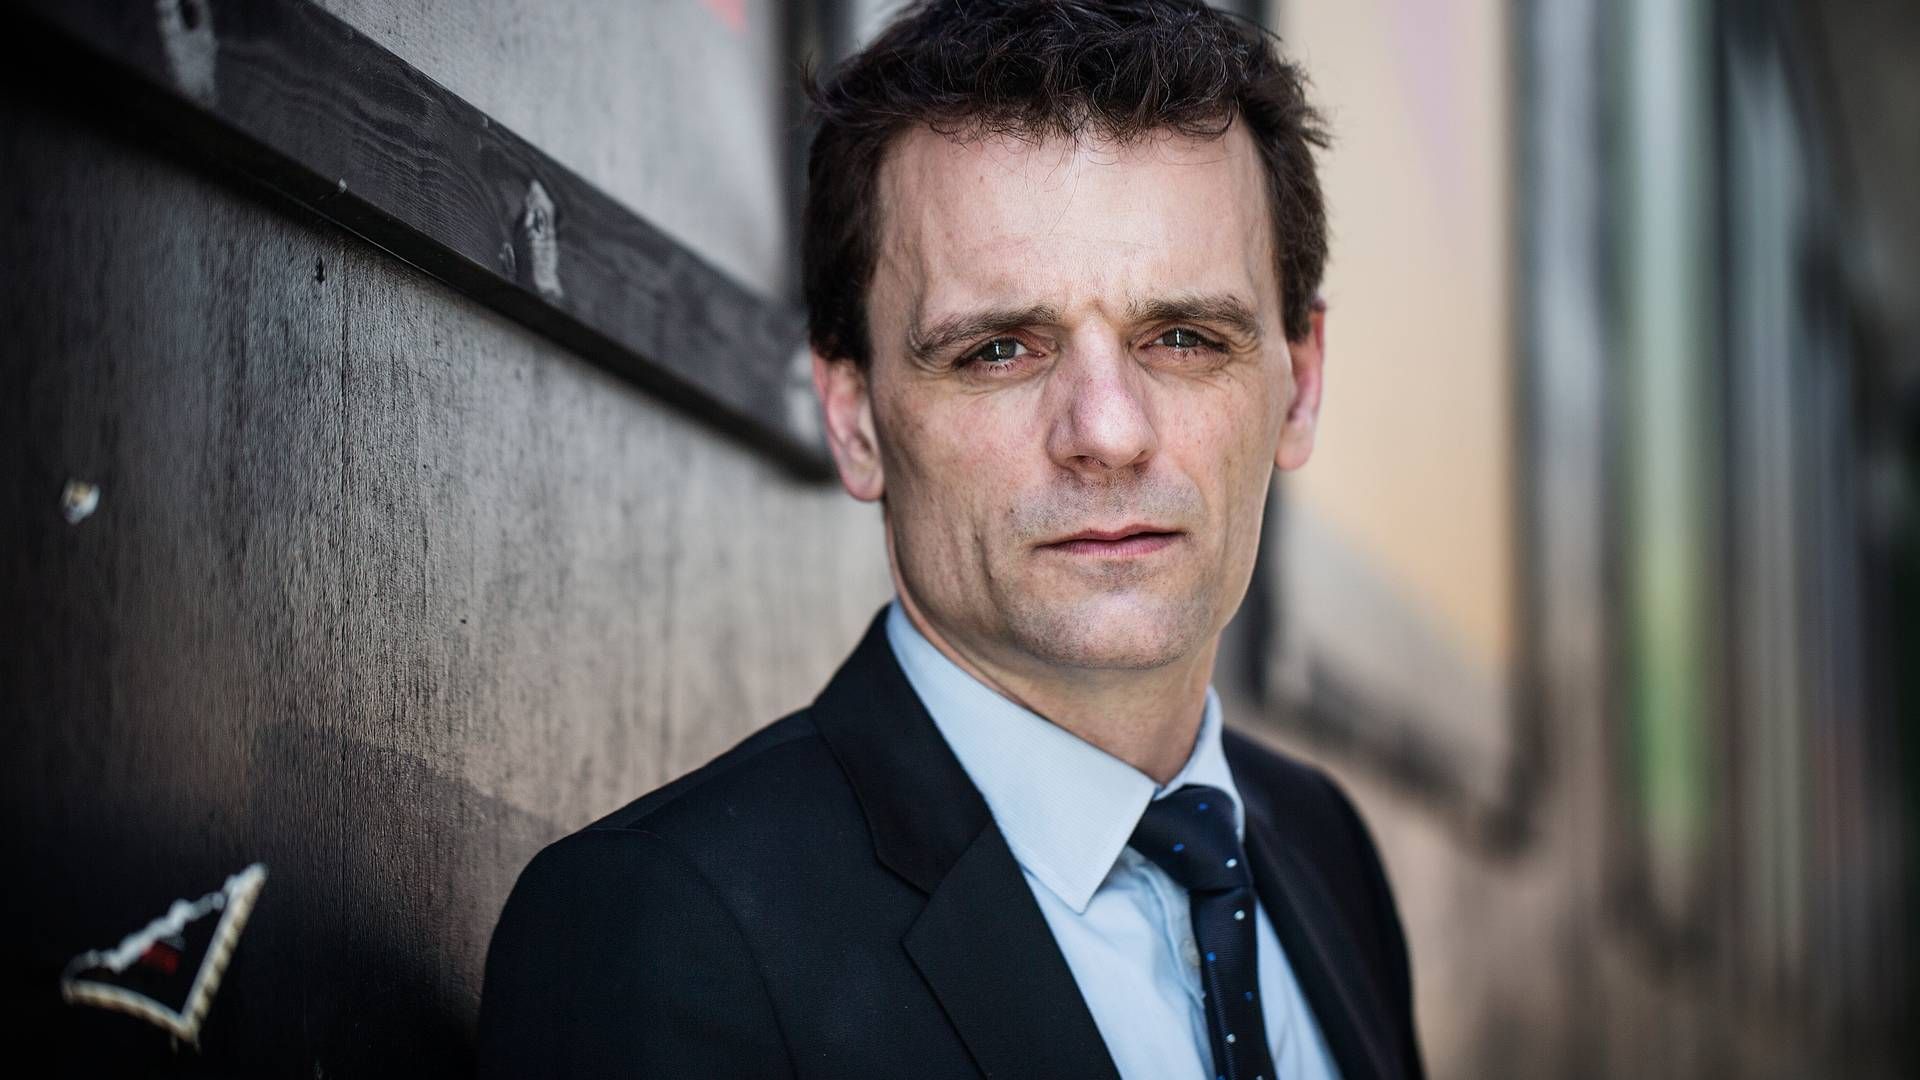 Thomas Torp stopper som adm. direktør i Grakom efter ni år i stillingen. | Foto: Niels Hougaard/Jyllands-Posten/Ritzau Scanpix